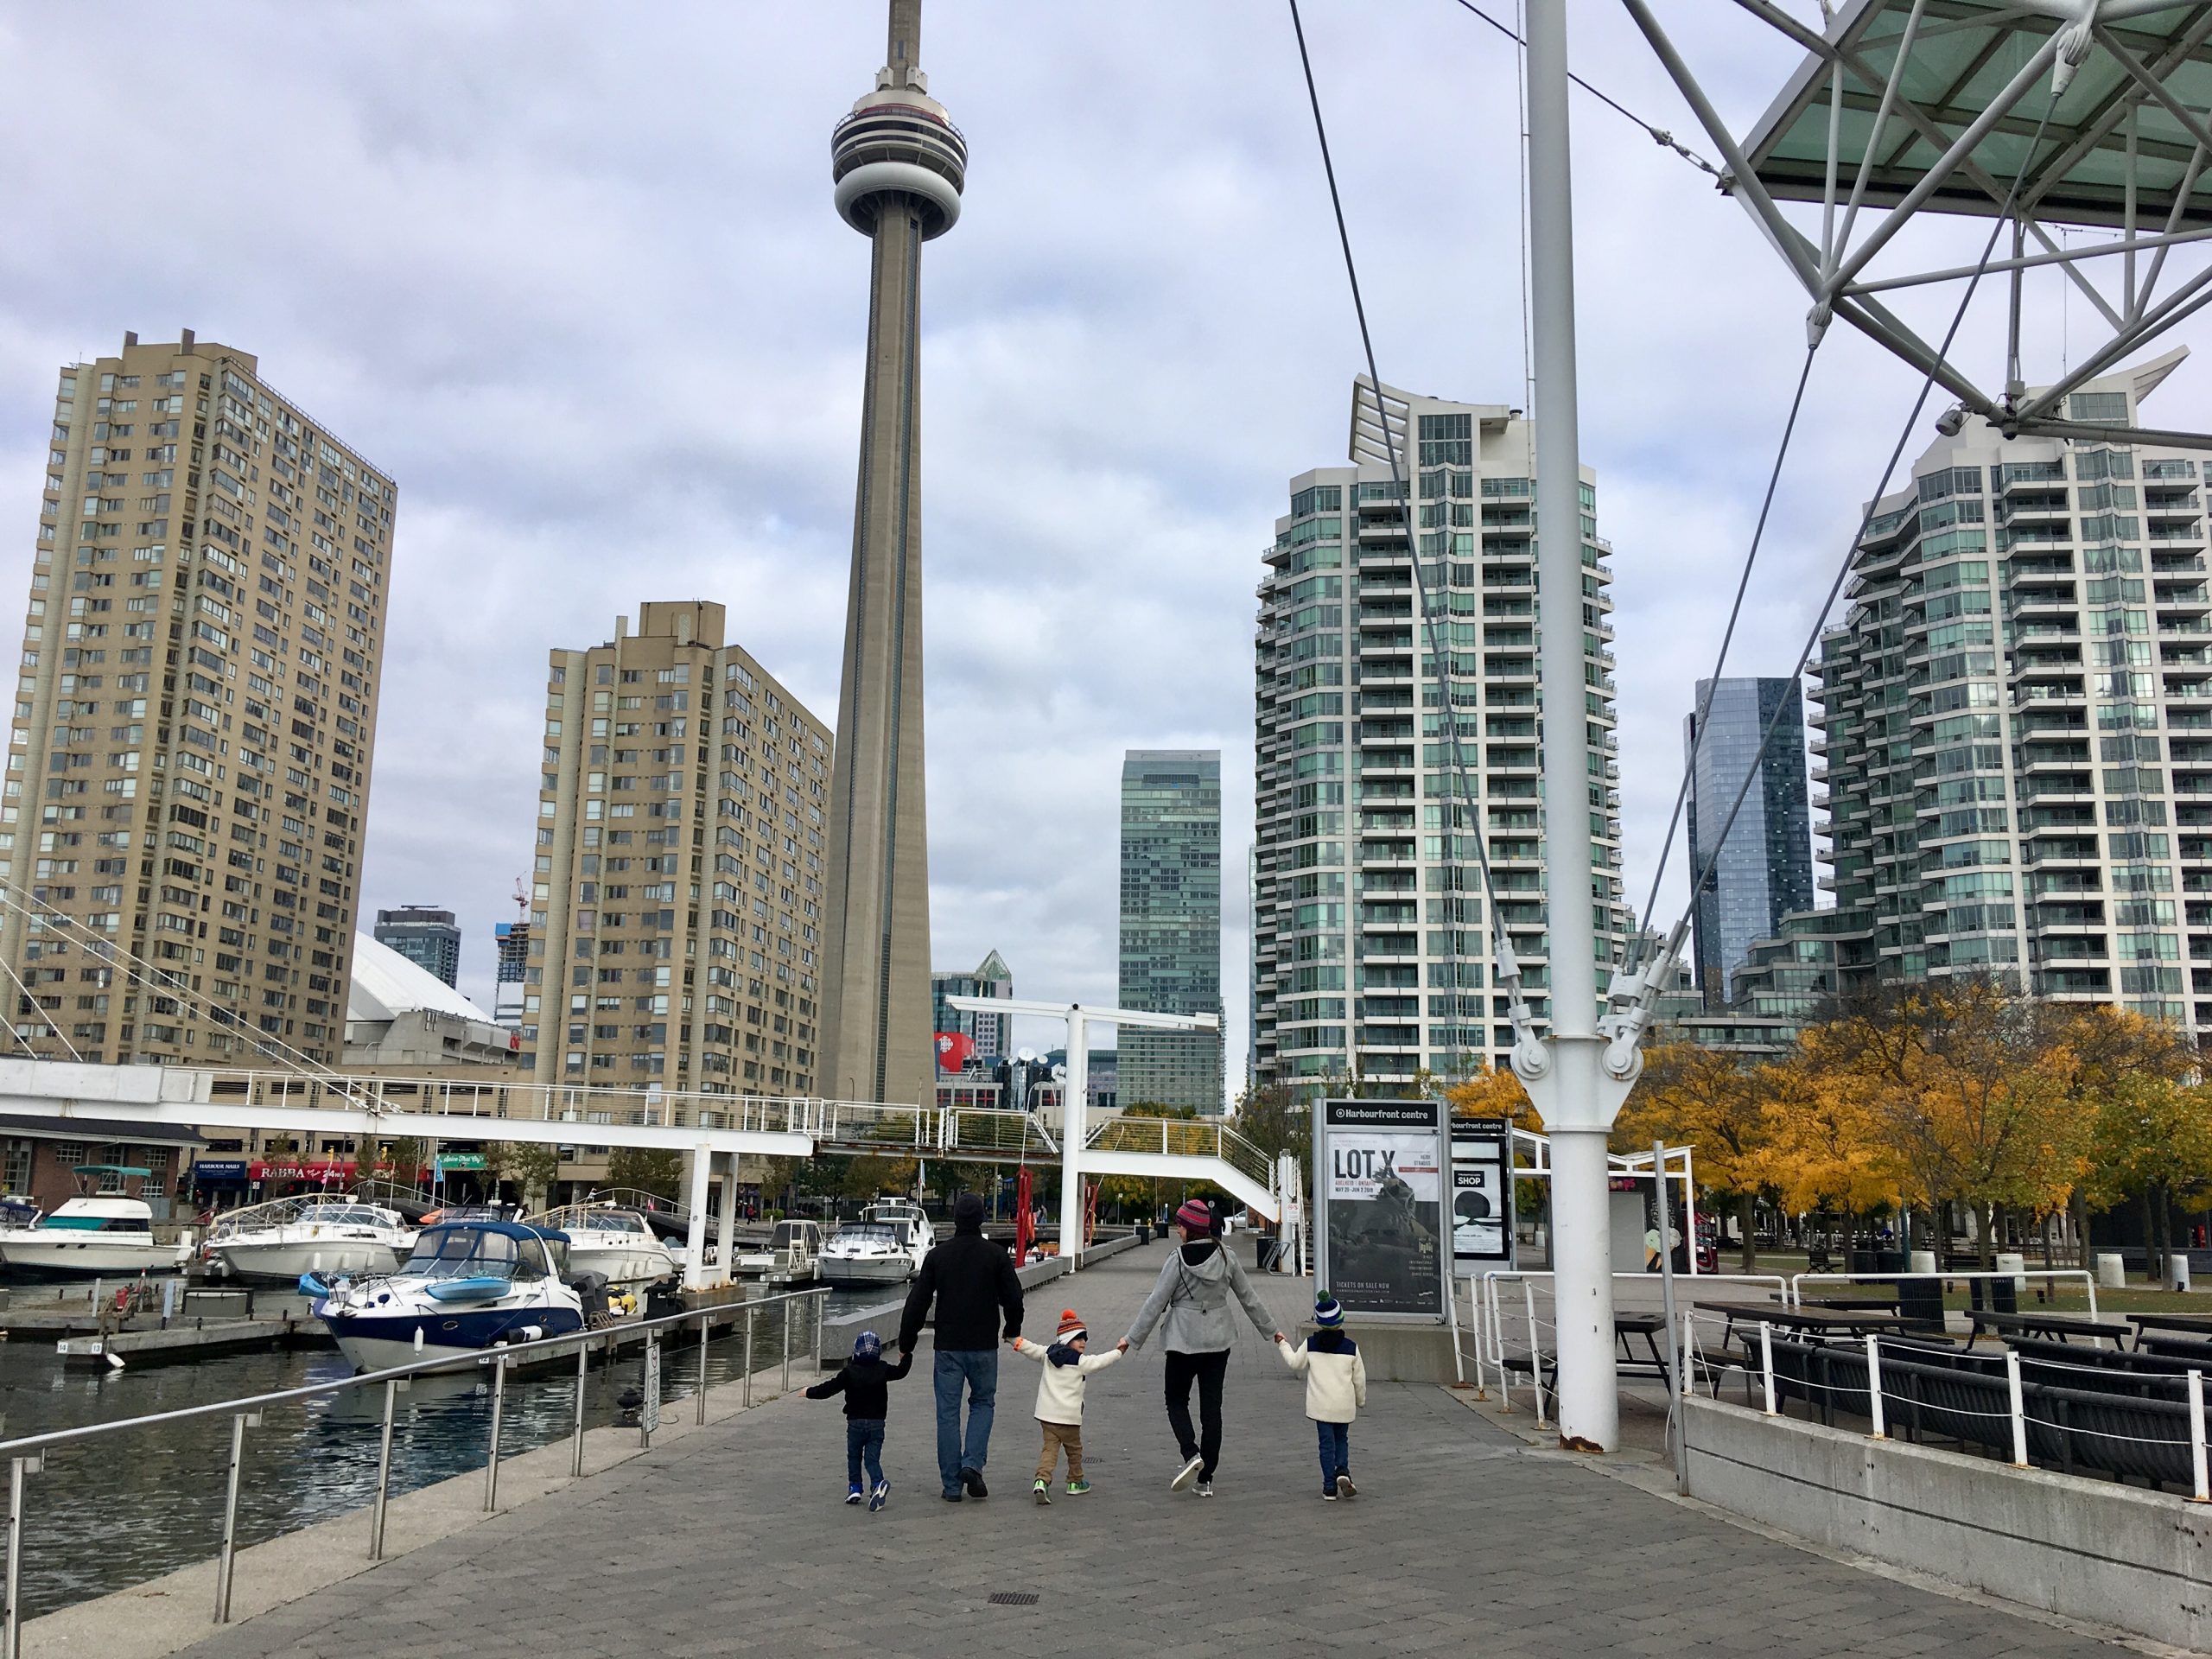 Hundt Family in Toronto, Ontario, Canada: October 2018